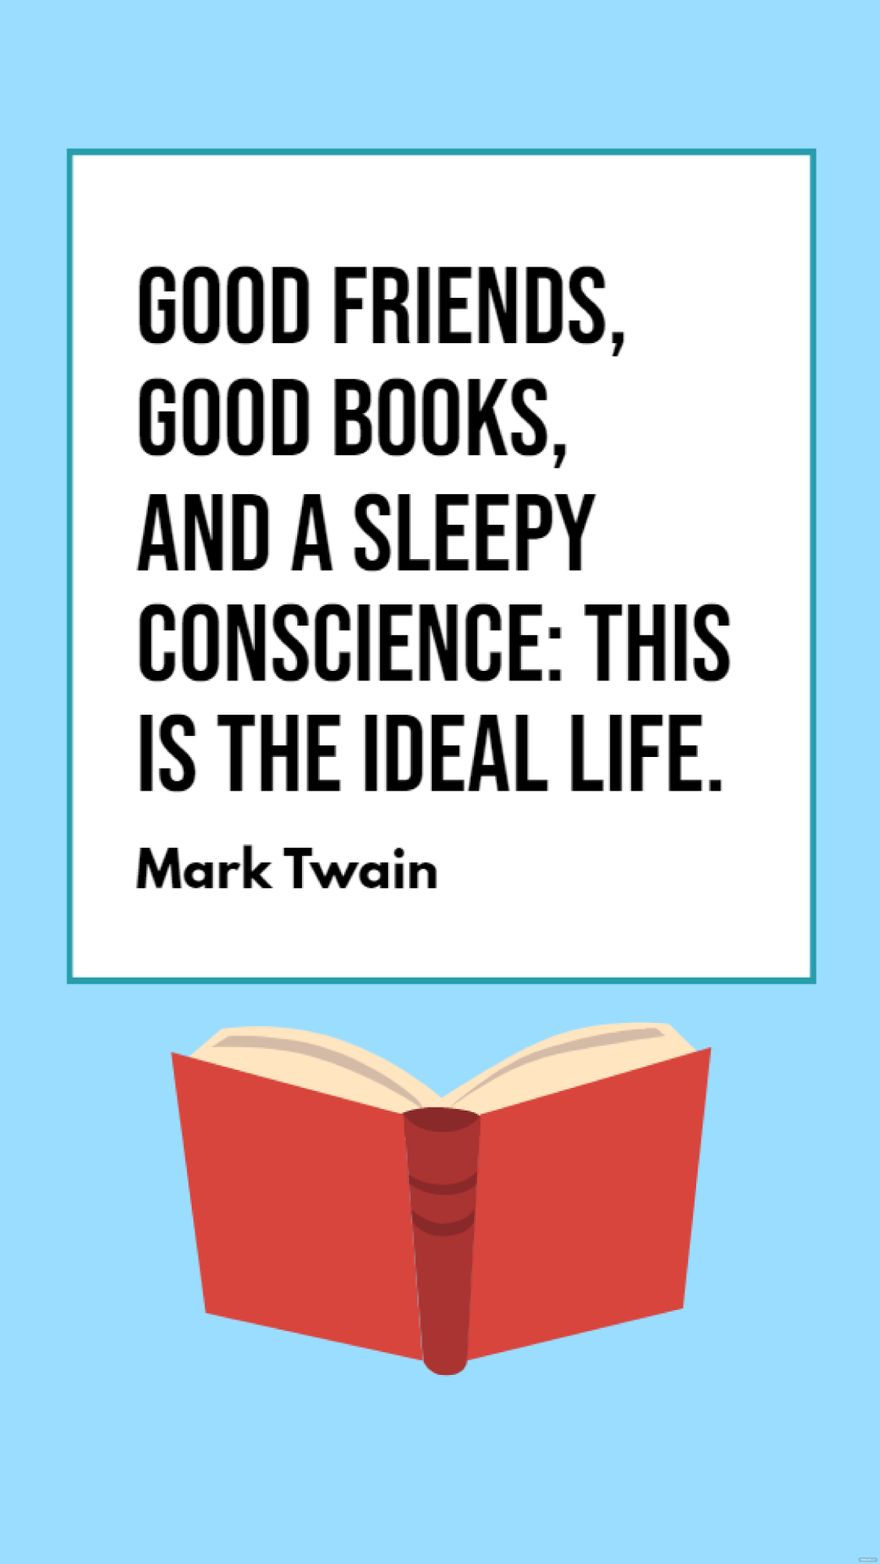 Mark Twain - Good friends, good books, and a sleepy conscience: this is the ideal life